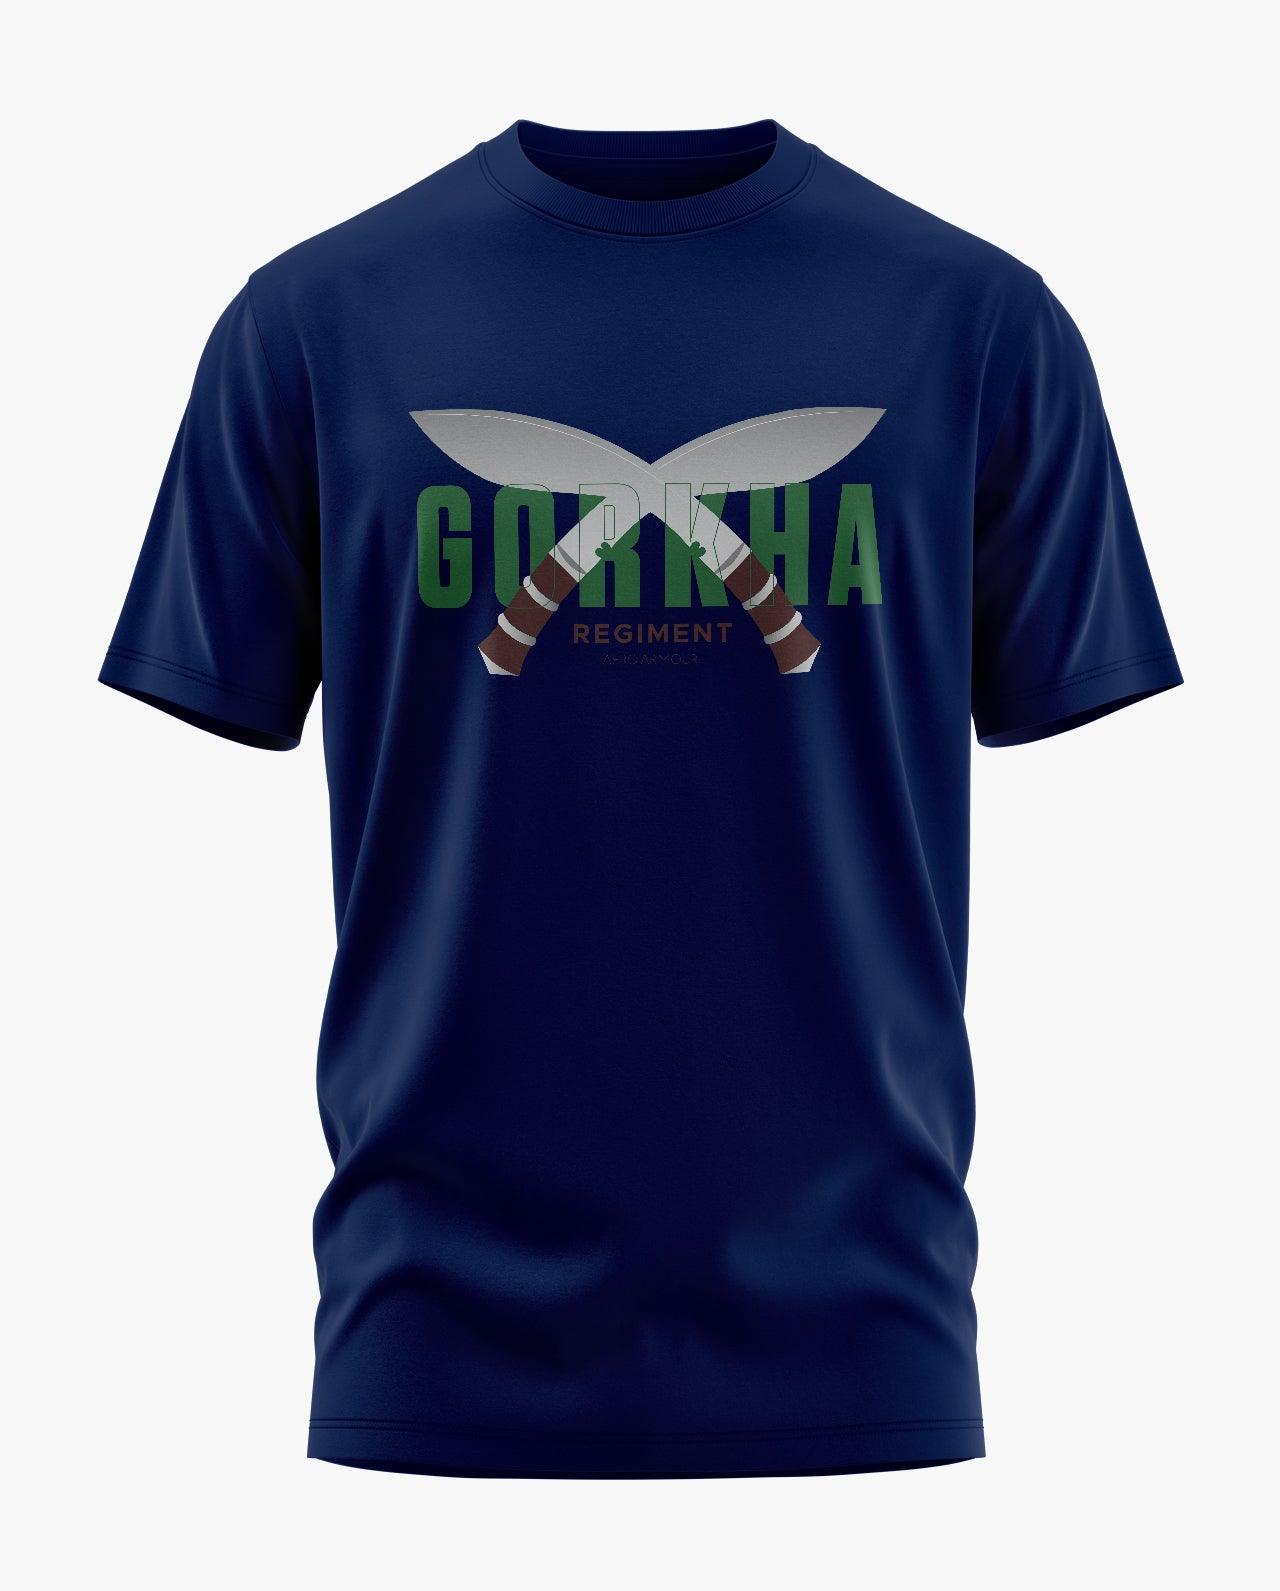 Gorkha Regiment T-Shirt - Aero Armour